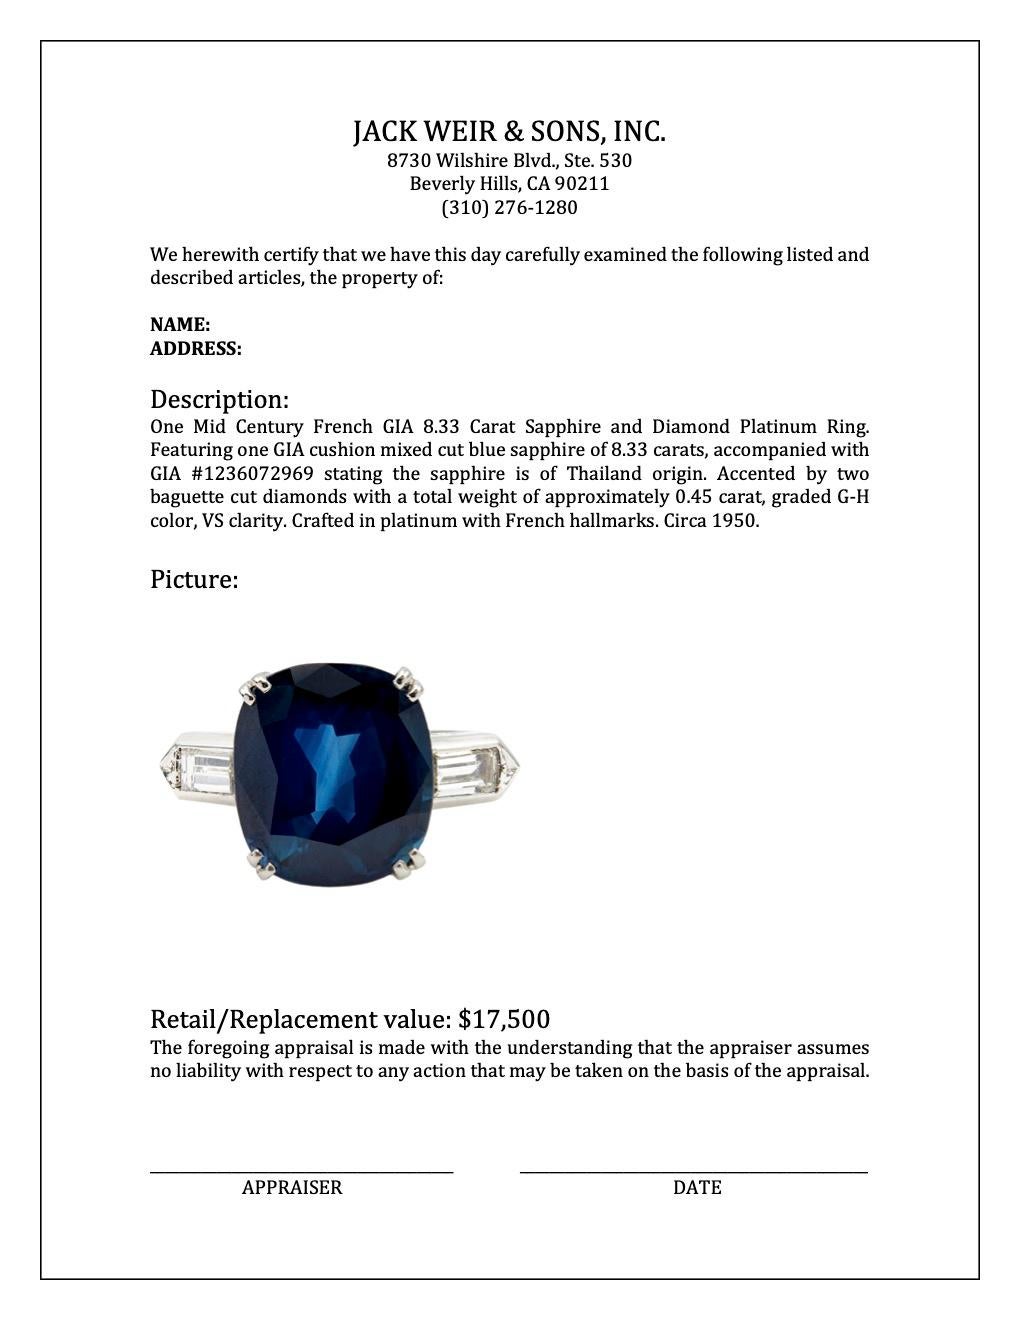 Mid Century French GIA 8.33 Carat Sapphire and Diamond Platinum Ring 3